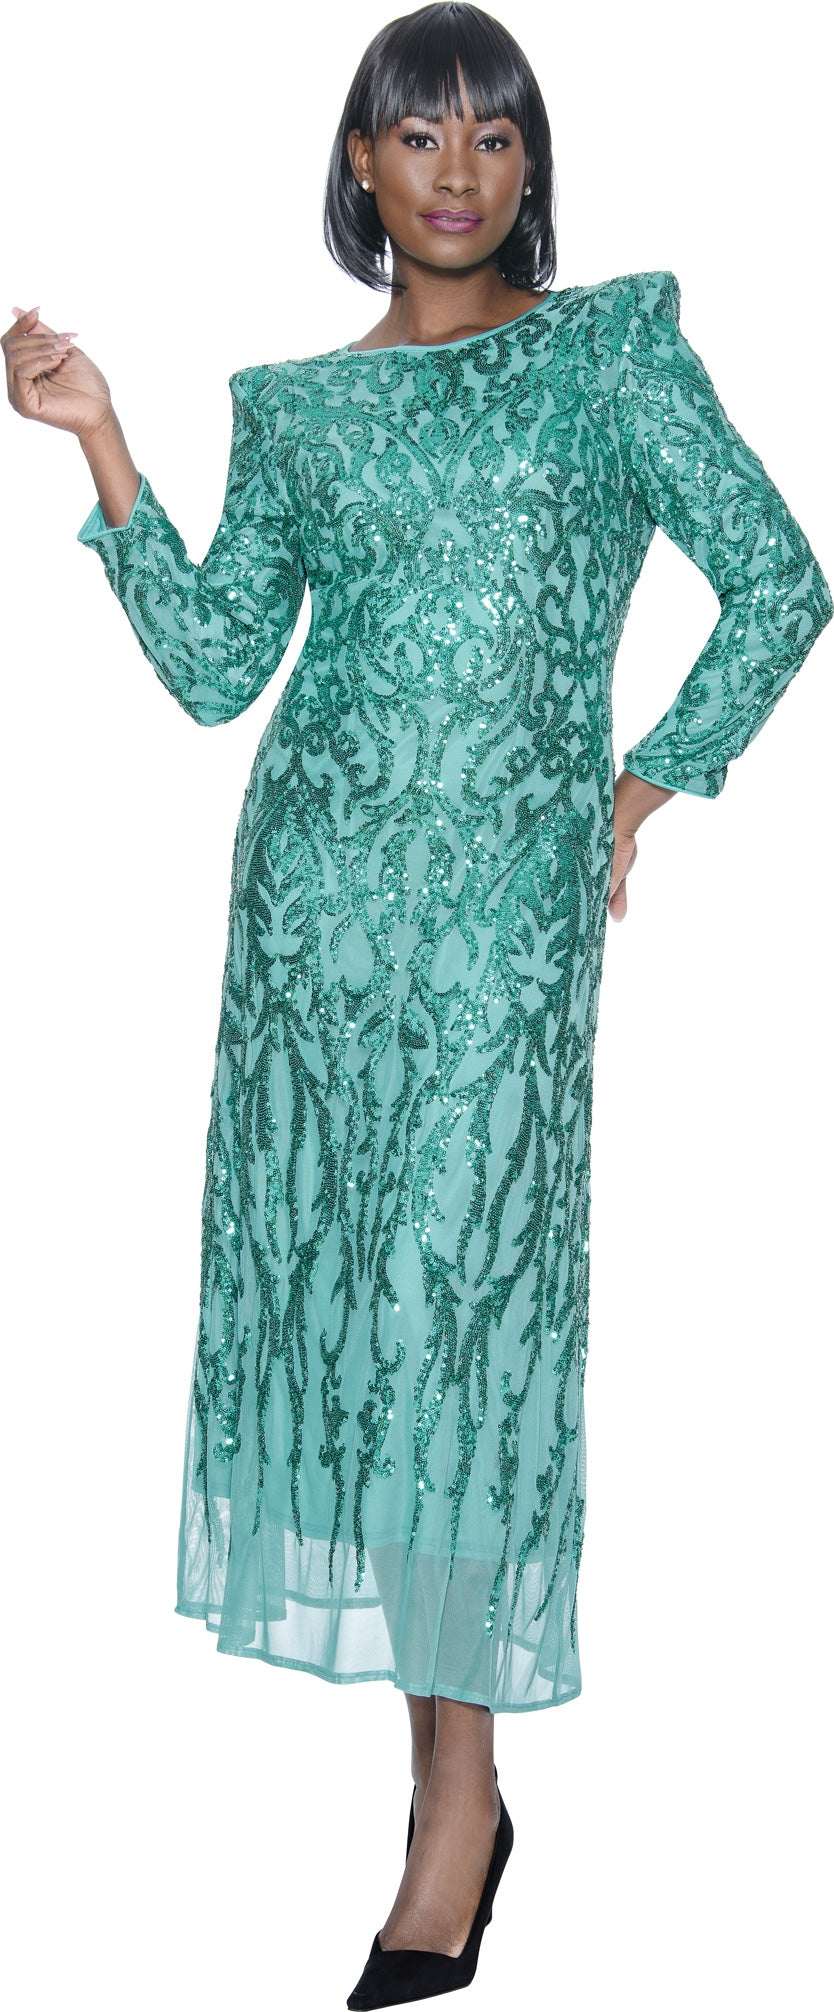 Terramina Dress 7100-Jade - Church Suits For Less